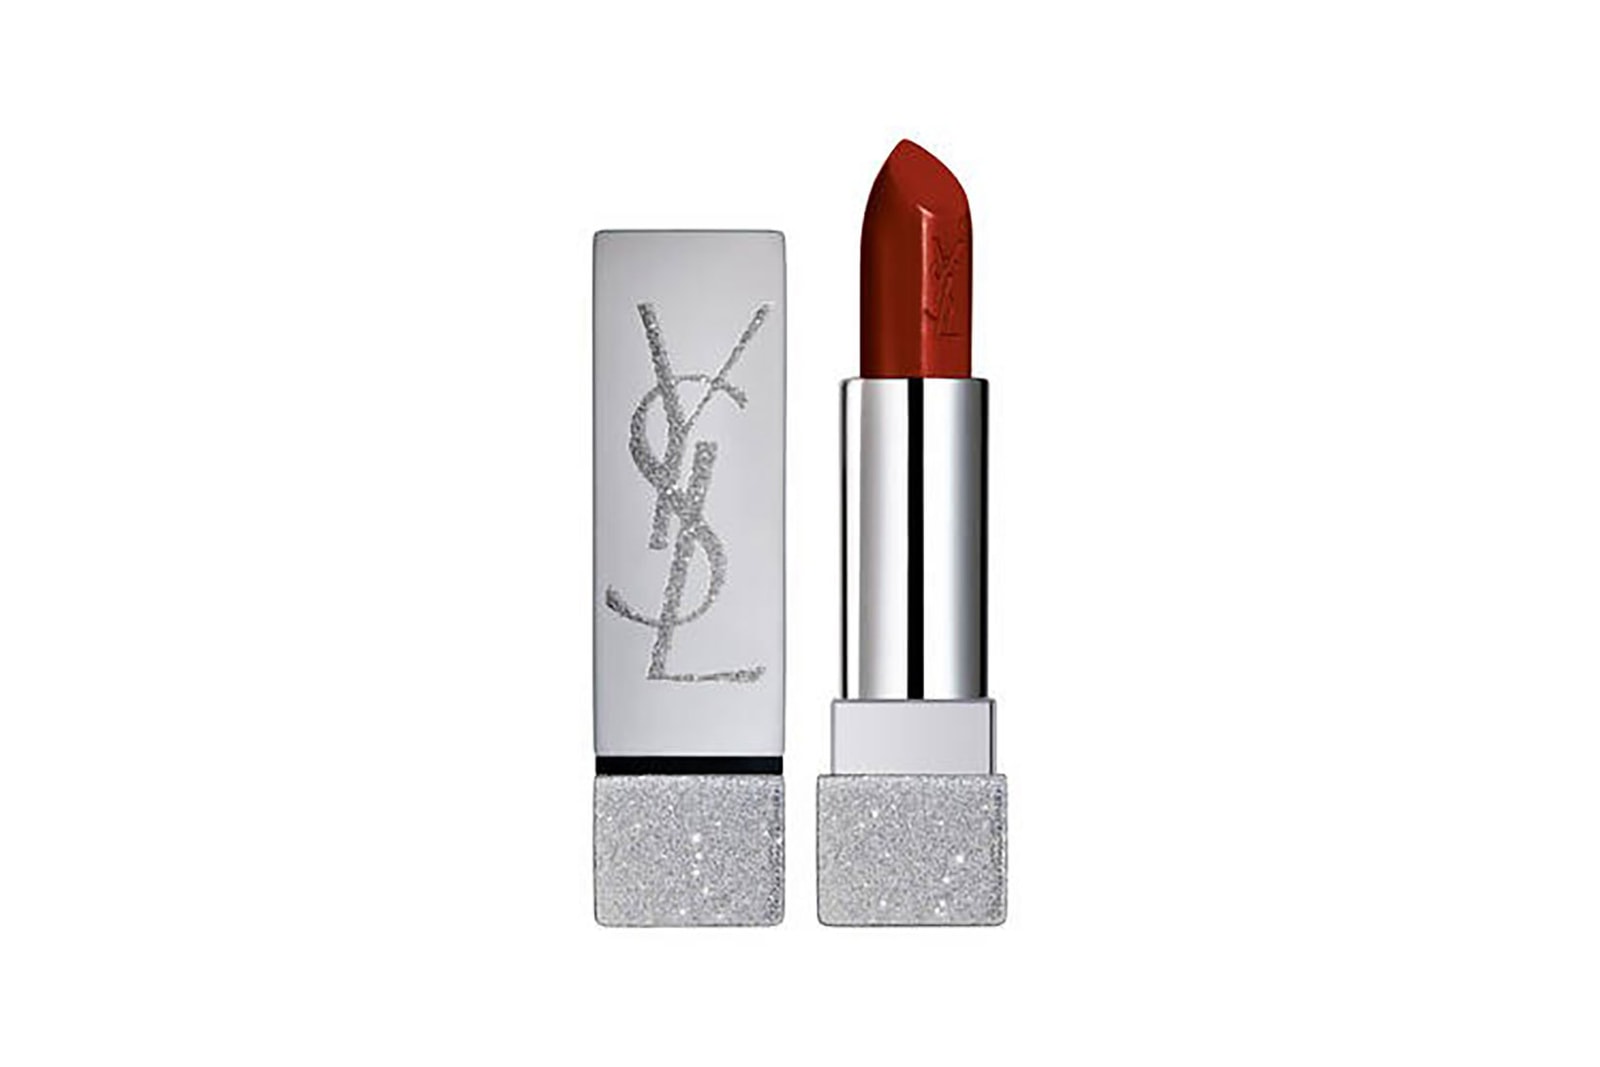 ysl beauty zoe kravitz rouge pur couture lipstick collaboration makeup